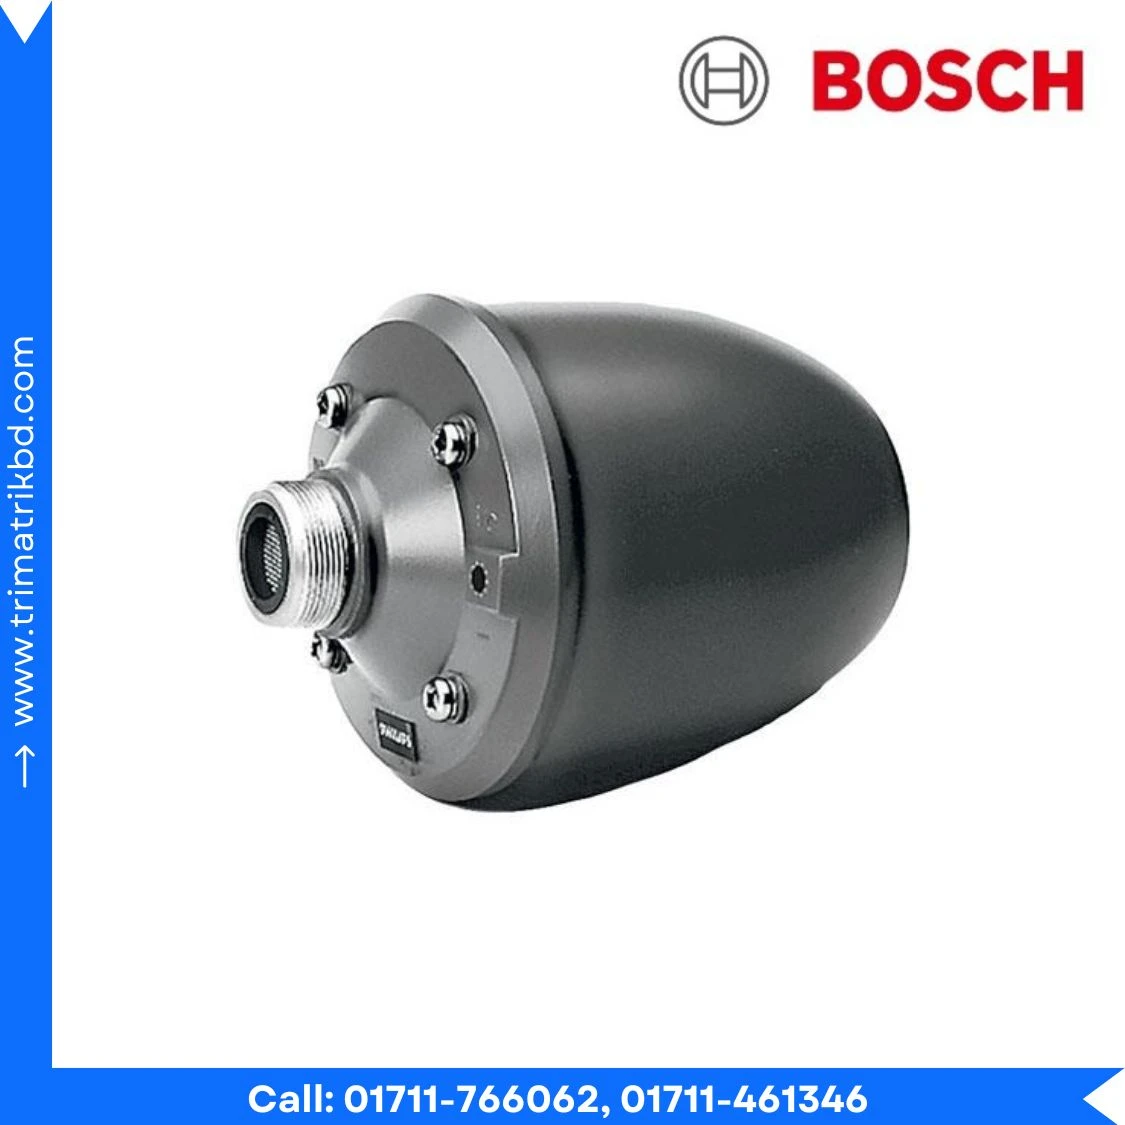 Bosch LHD-UM60X-IN 60W LMT Horn Driver Unit